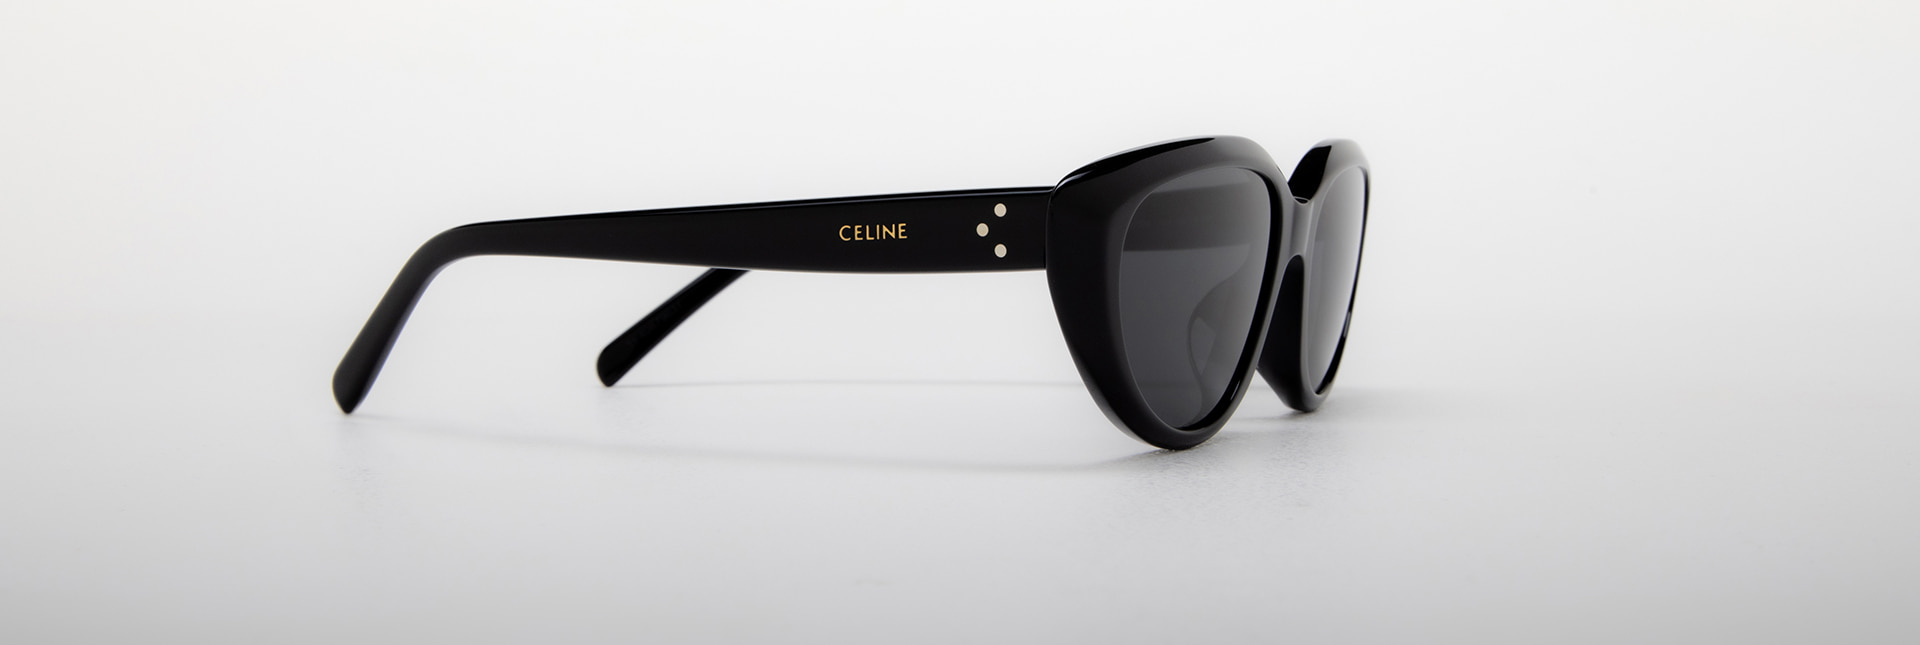 Sunglasses Celine